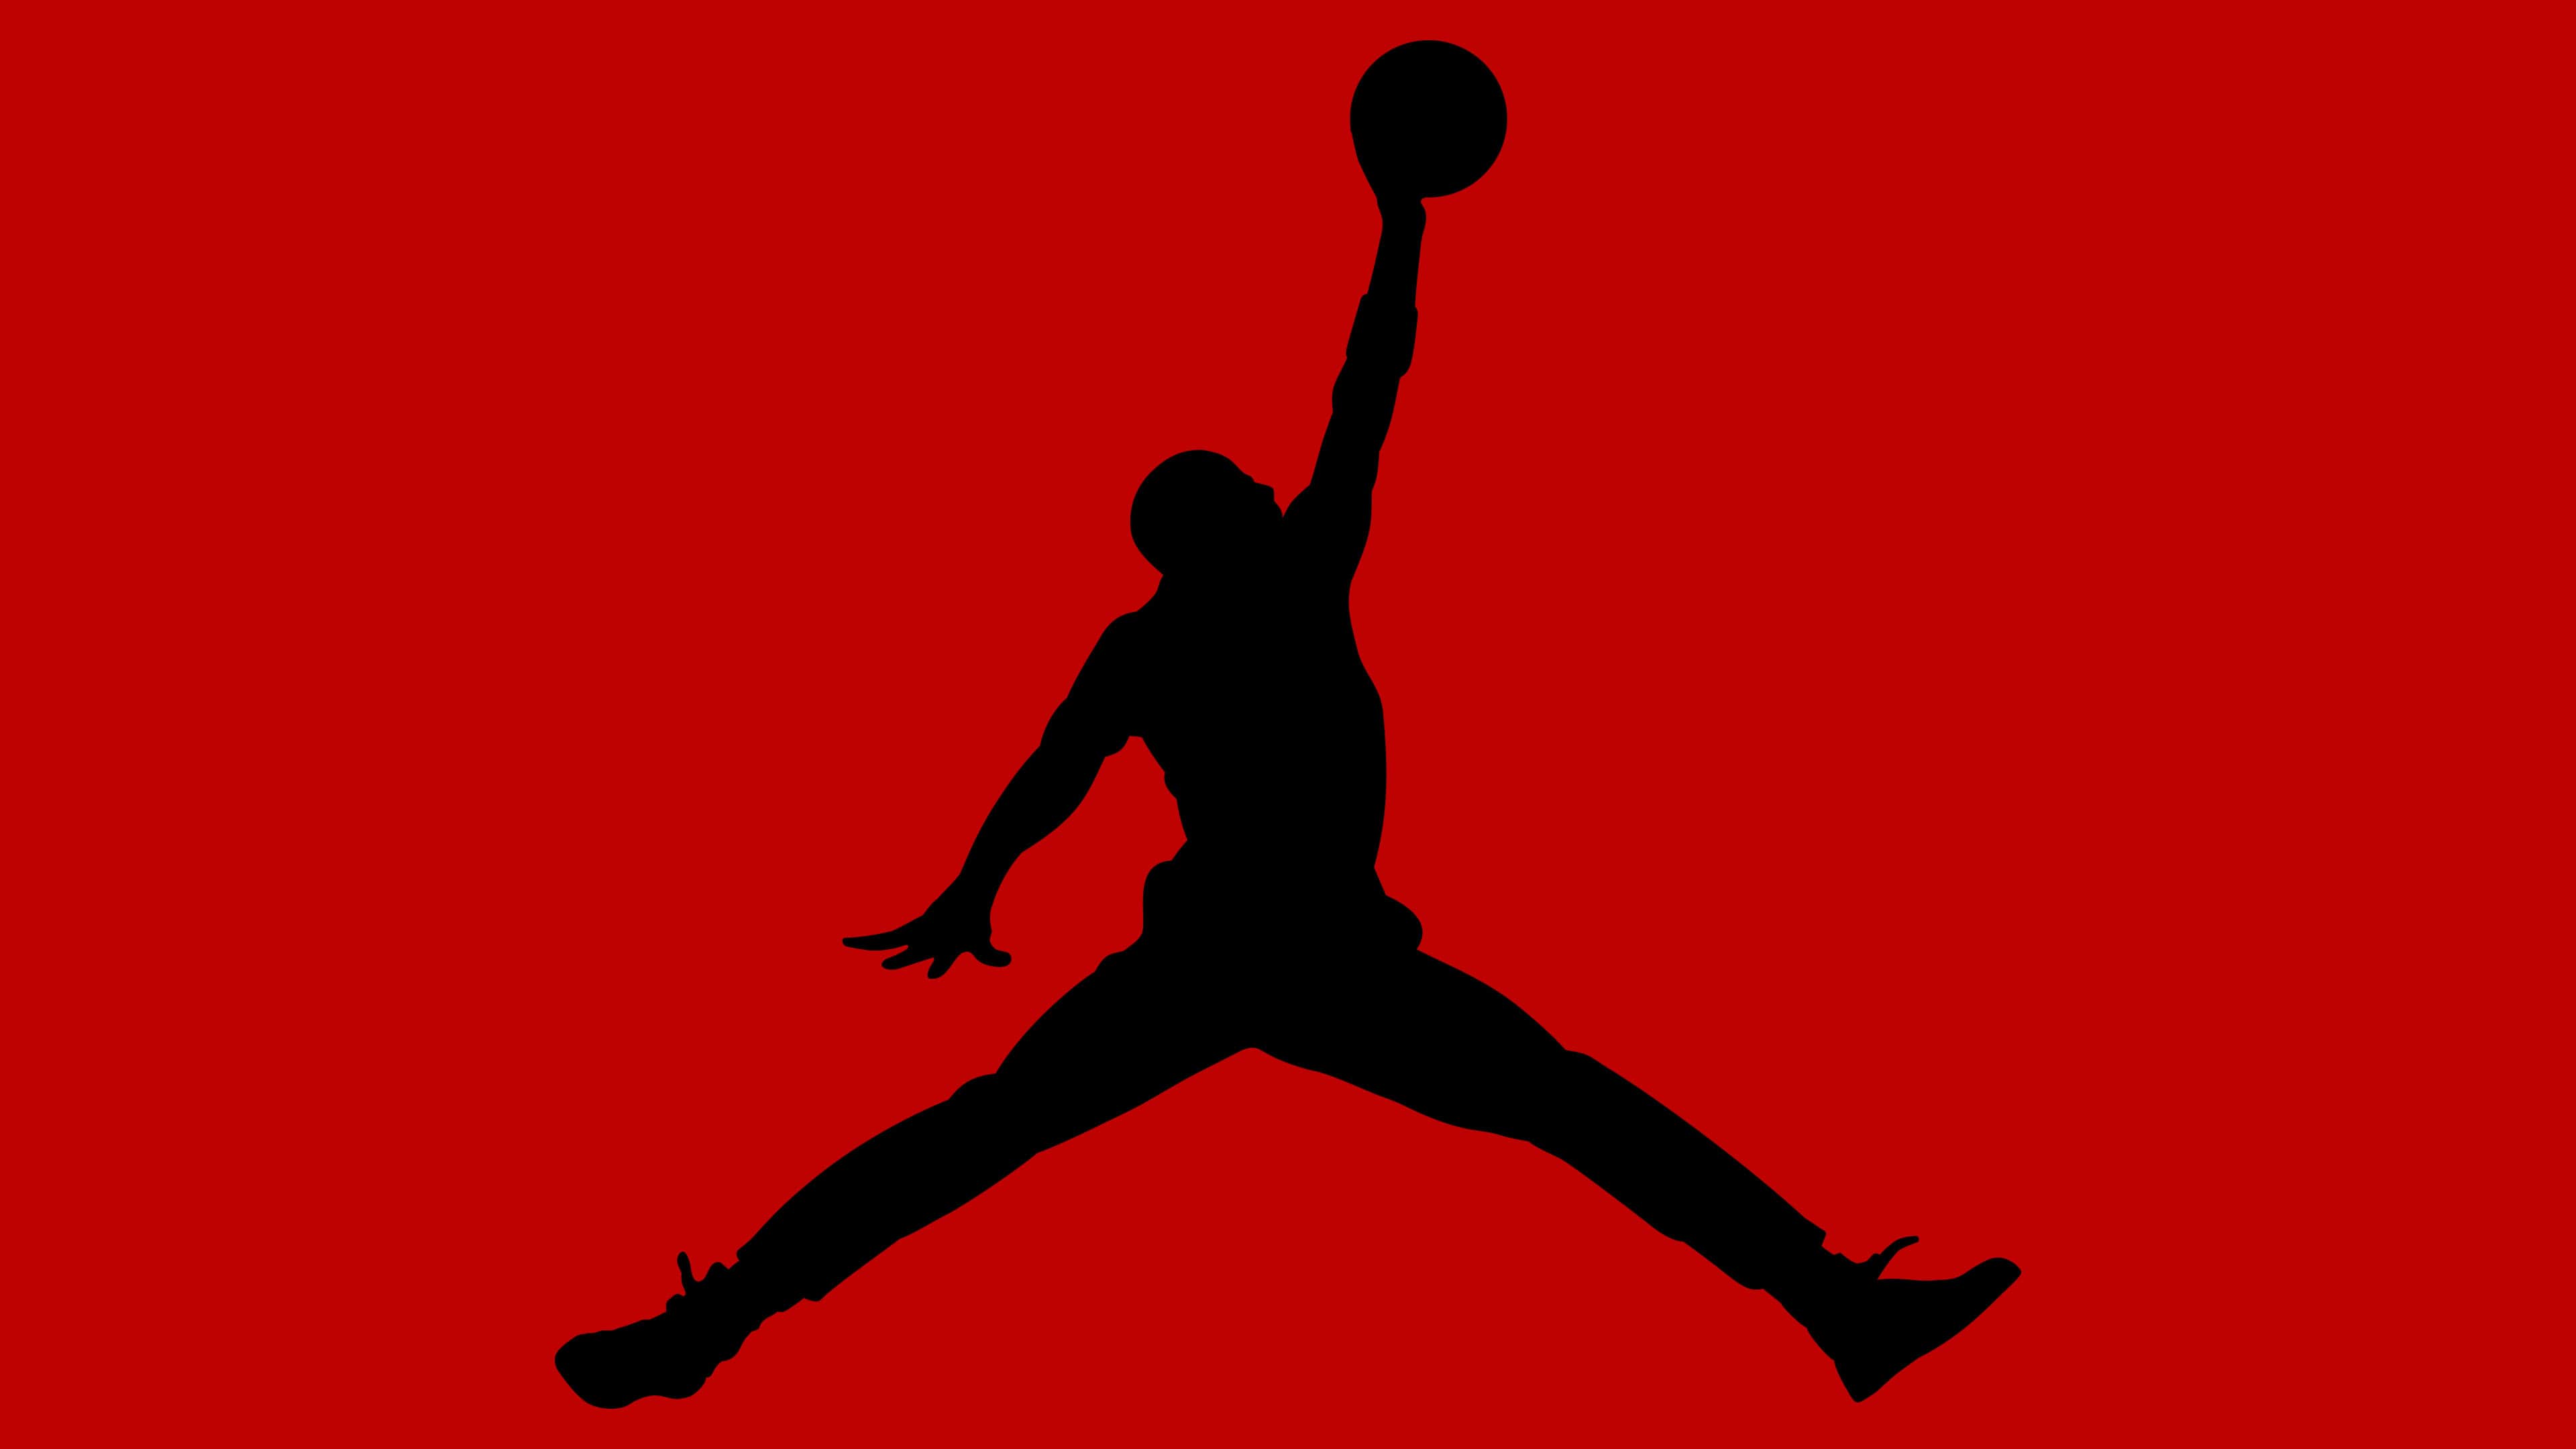 Simbolo De Nike Jordan